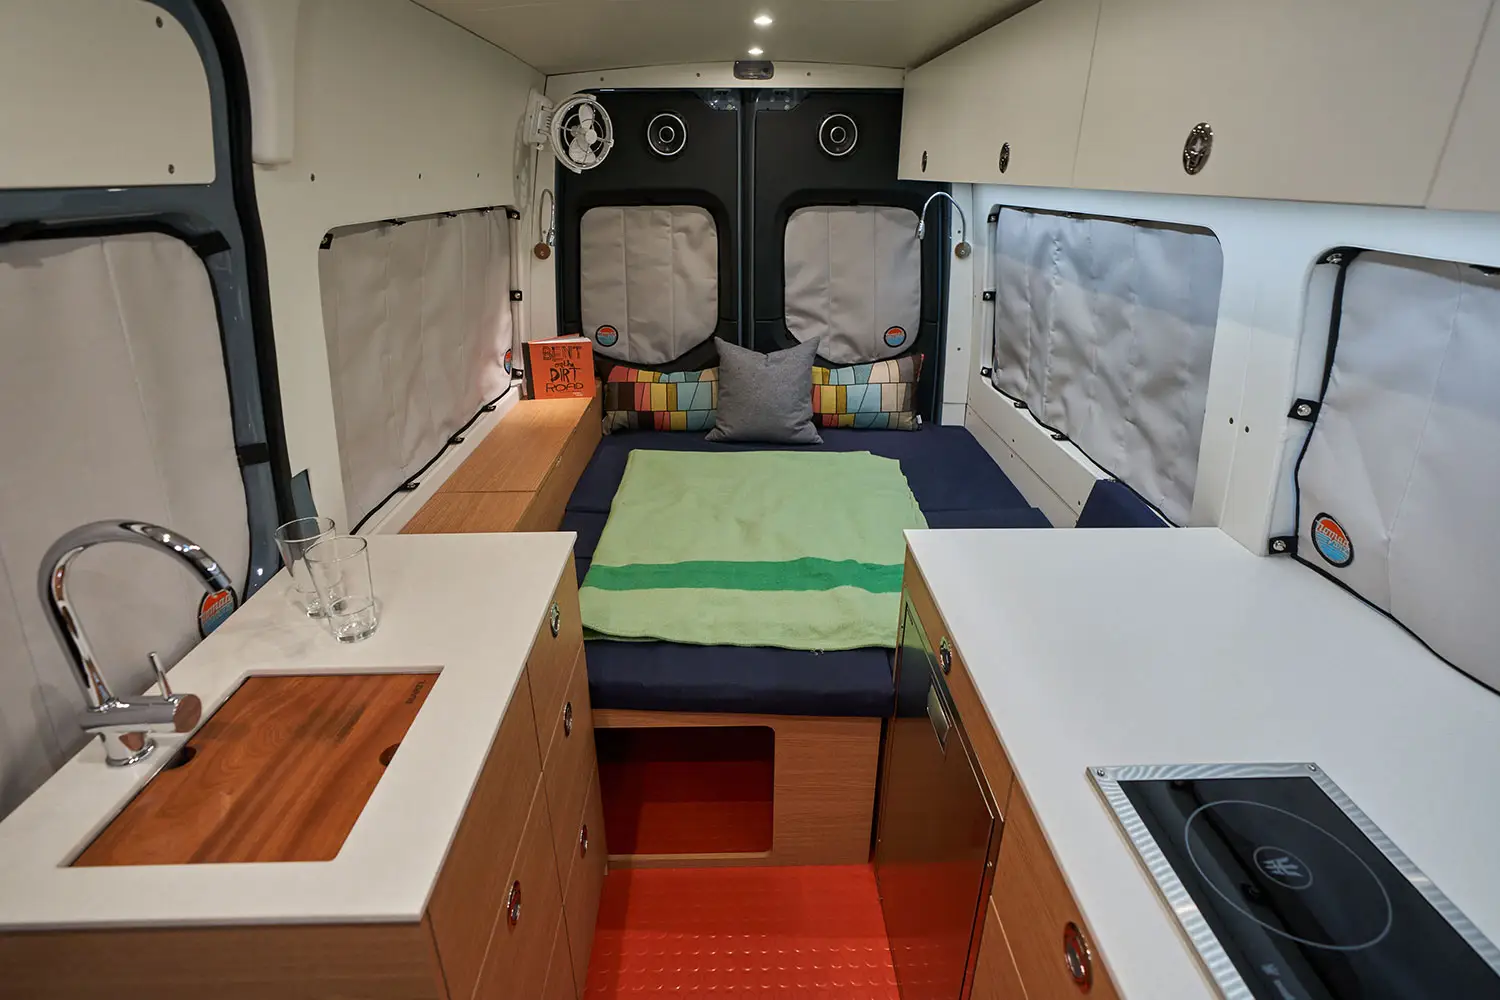 Oasis Lounge VS30 144WB HR 4x4 2500 Nomad Vanz Premium Custom Conversion